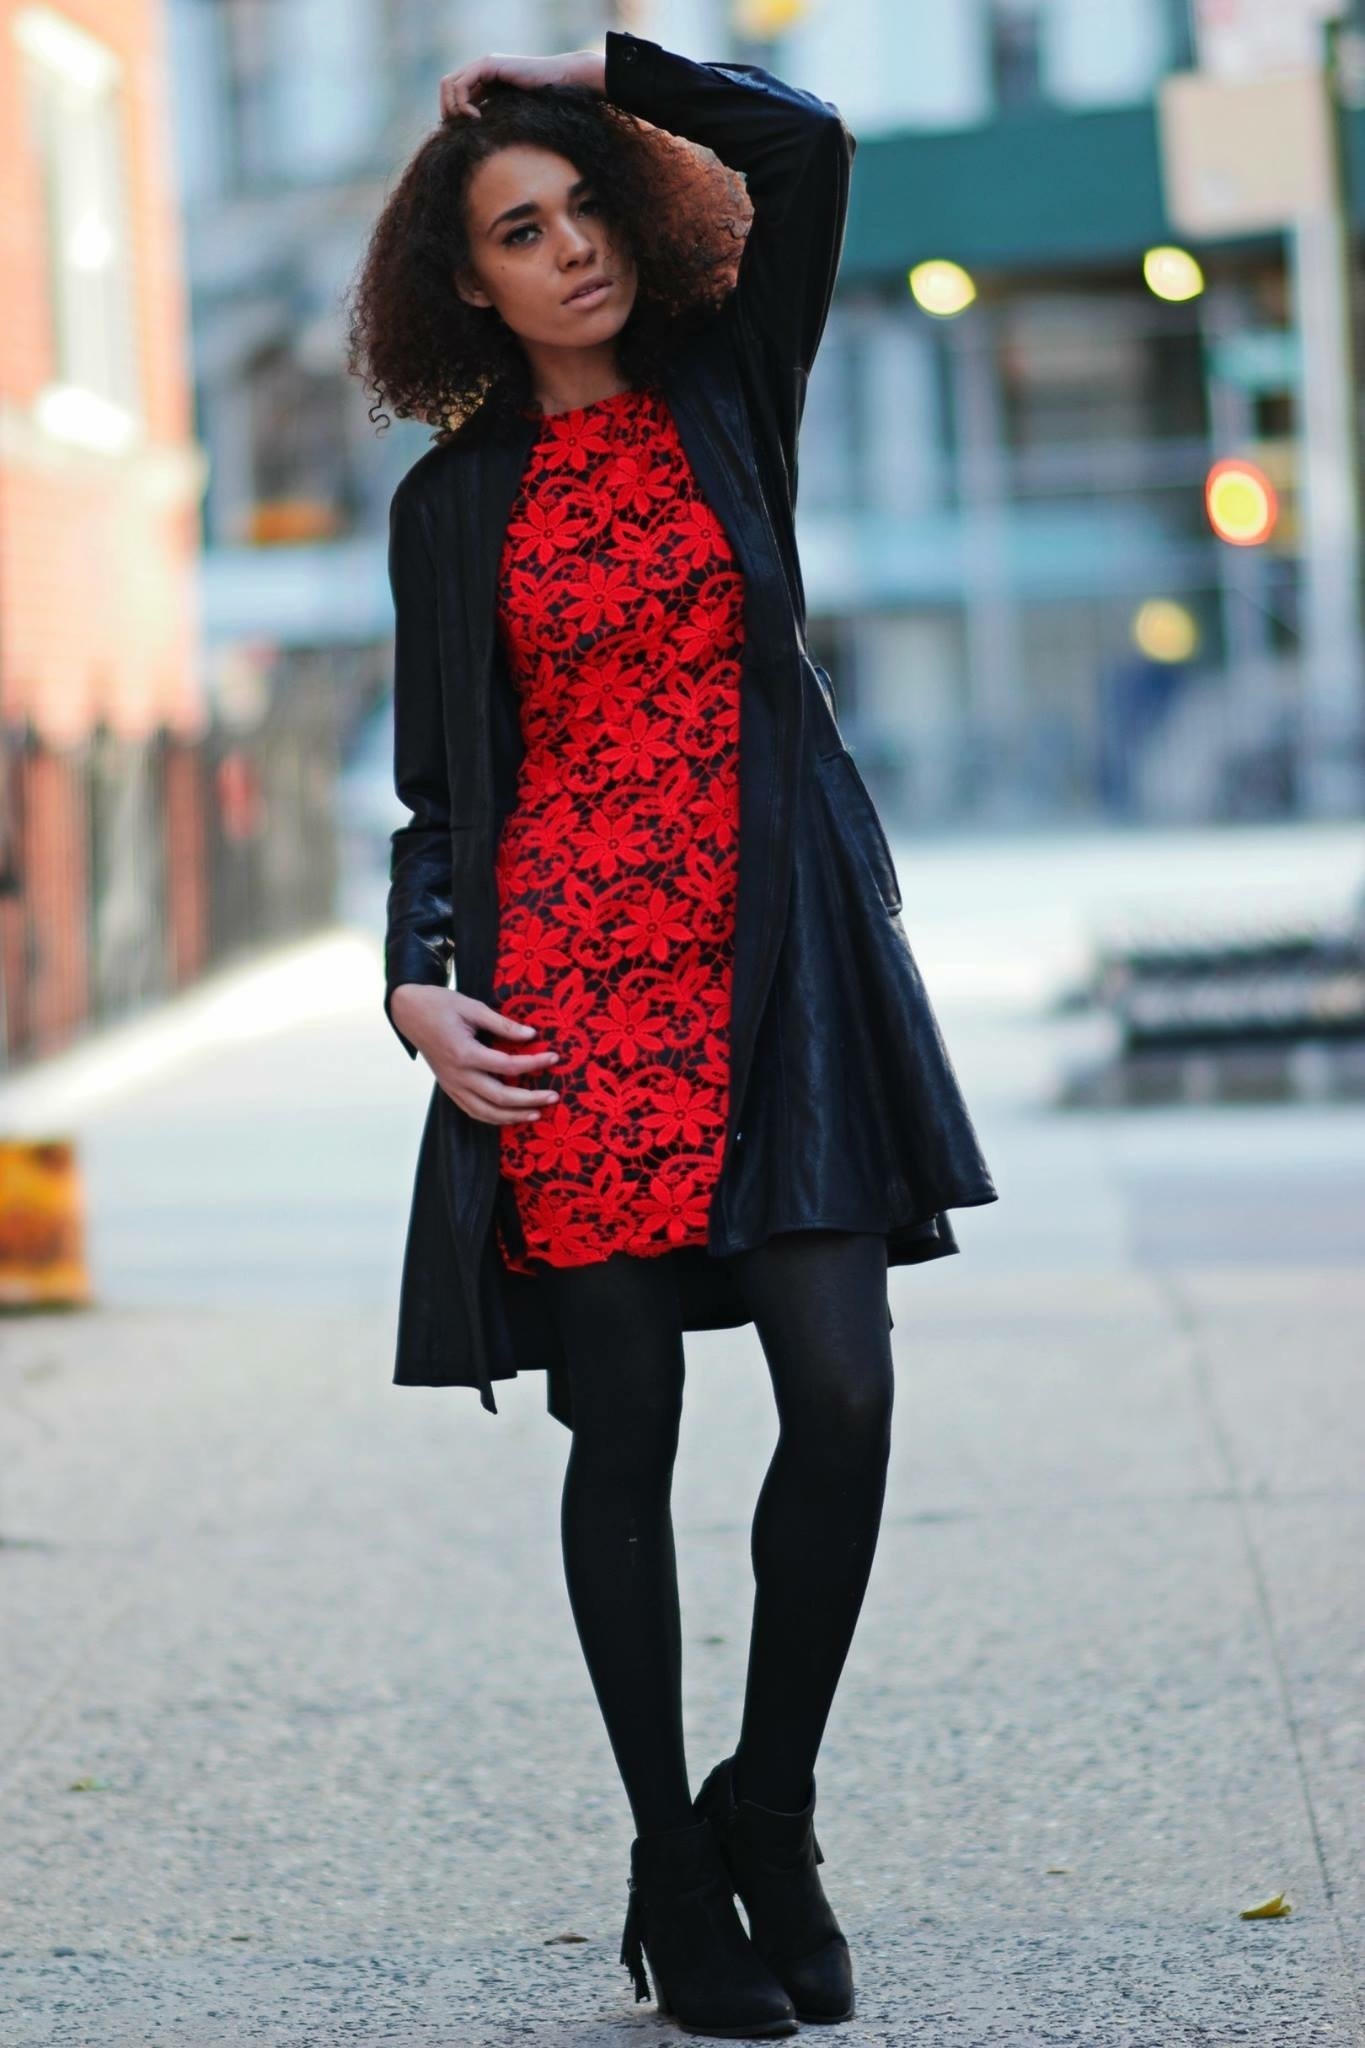 Women's Black Leather Coat, Red Lace Sheath Dress, Black Fringe